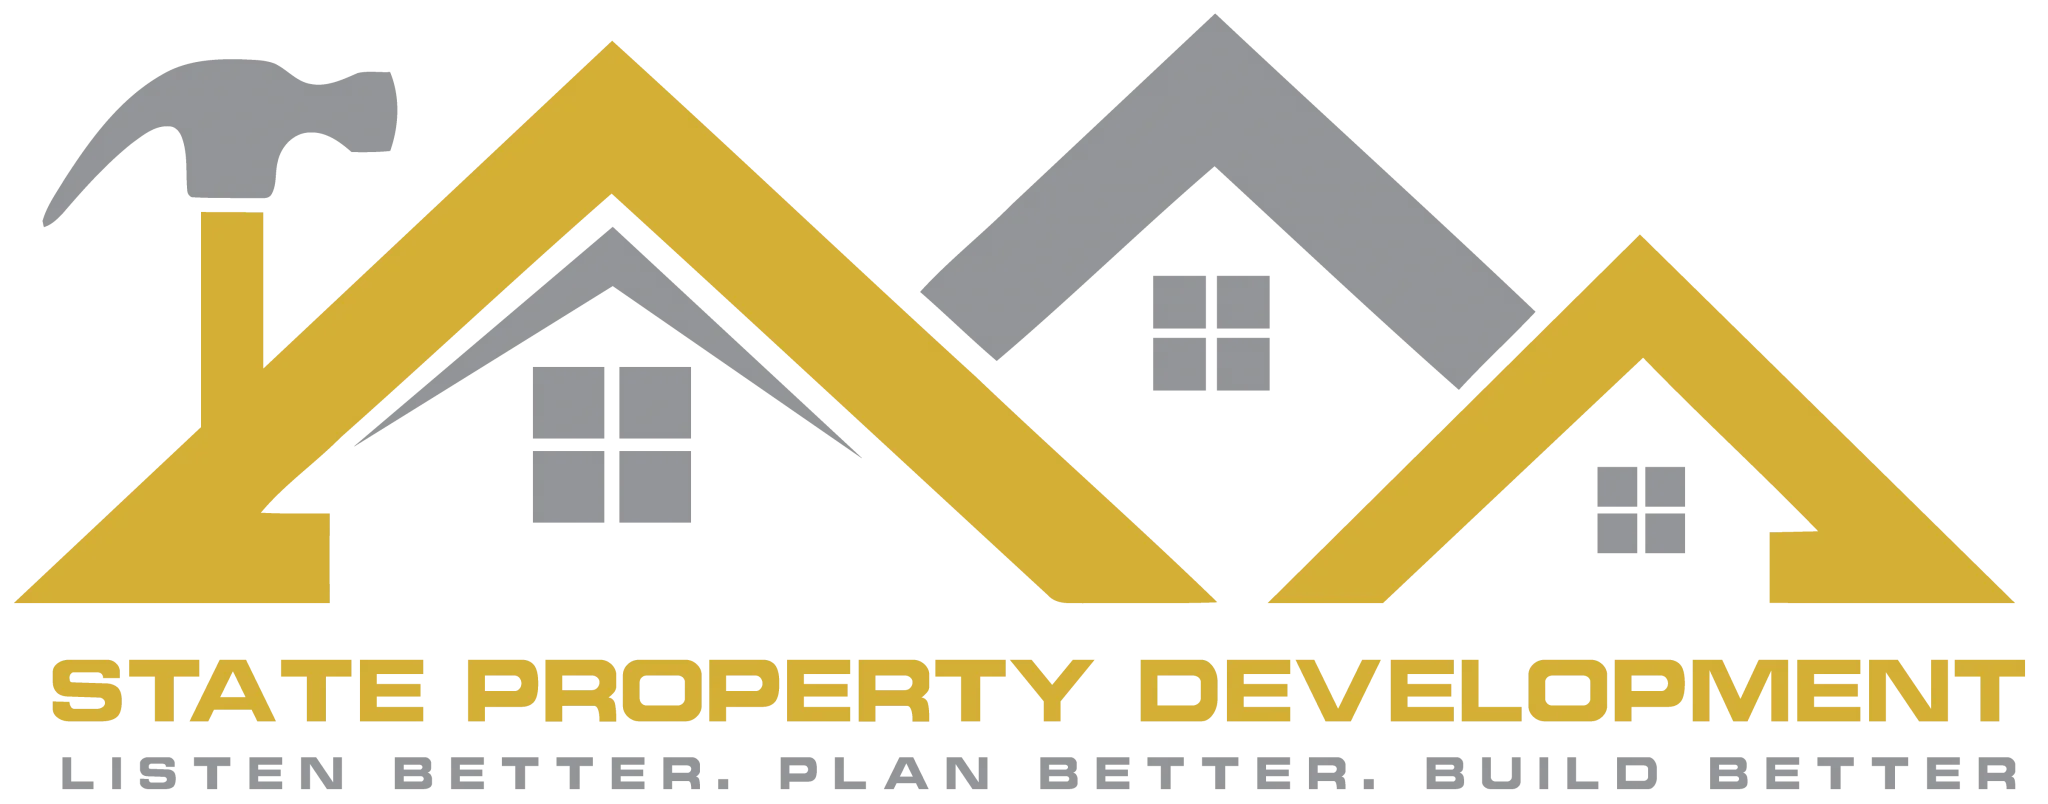 State Property Development